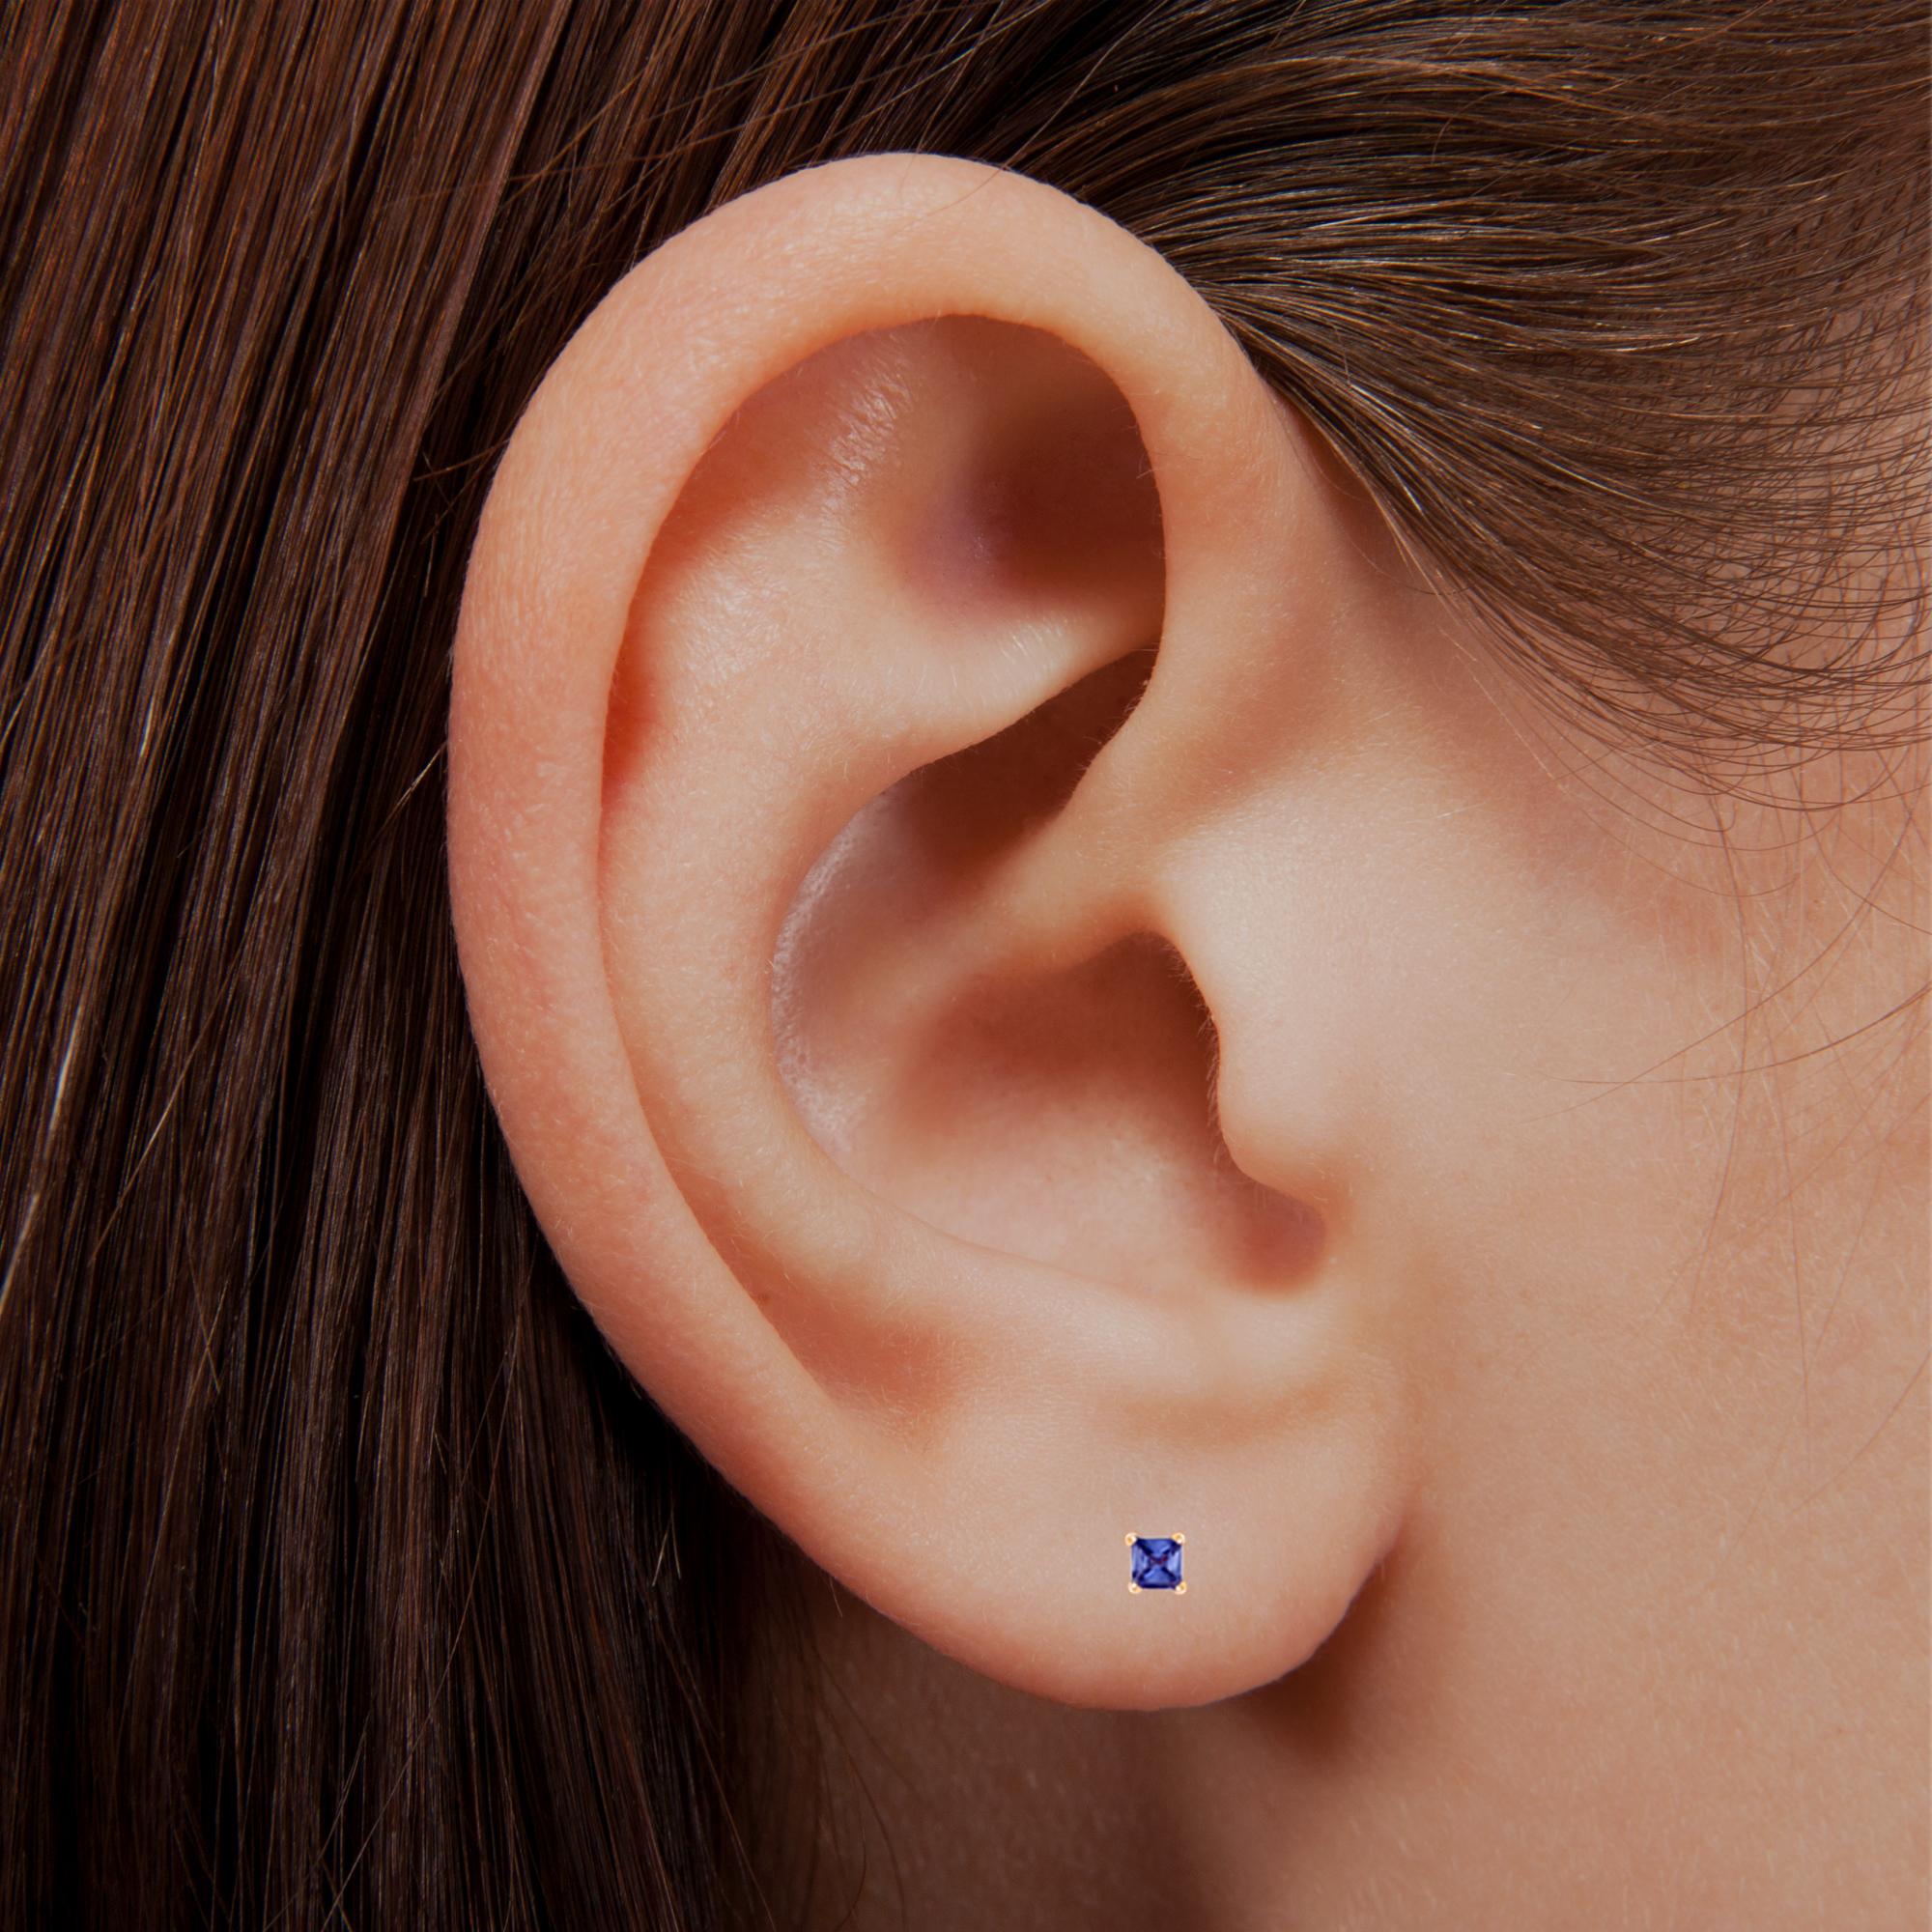 Blue Sapphire Earring Studs Mini Cute Size 14 Karat Yellow Gold, Natural Blue 4